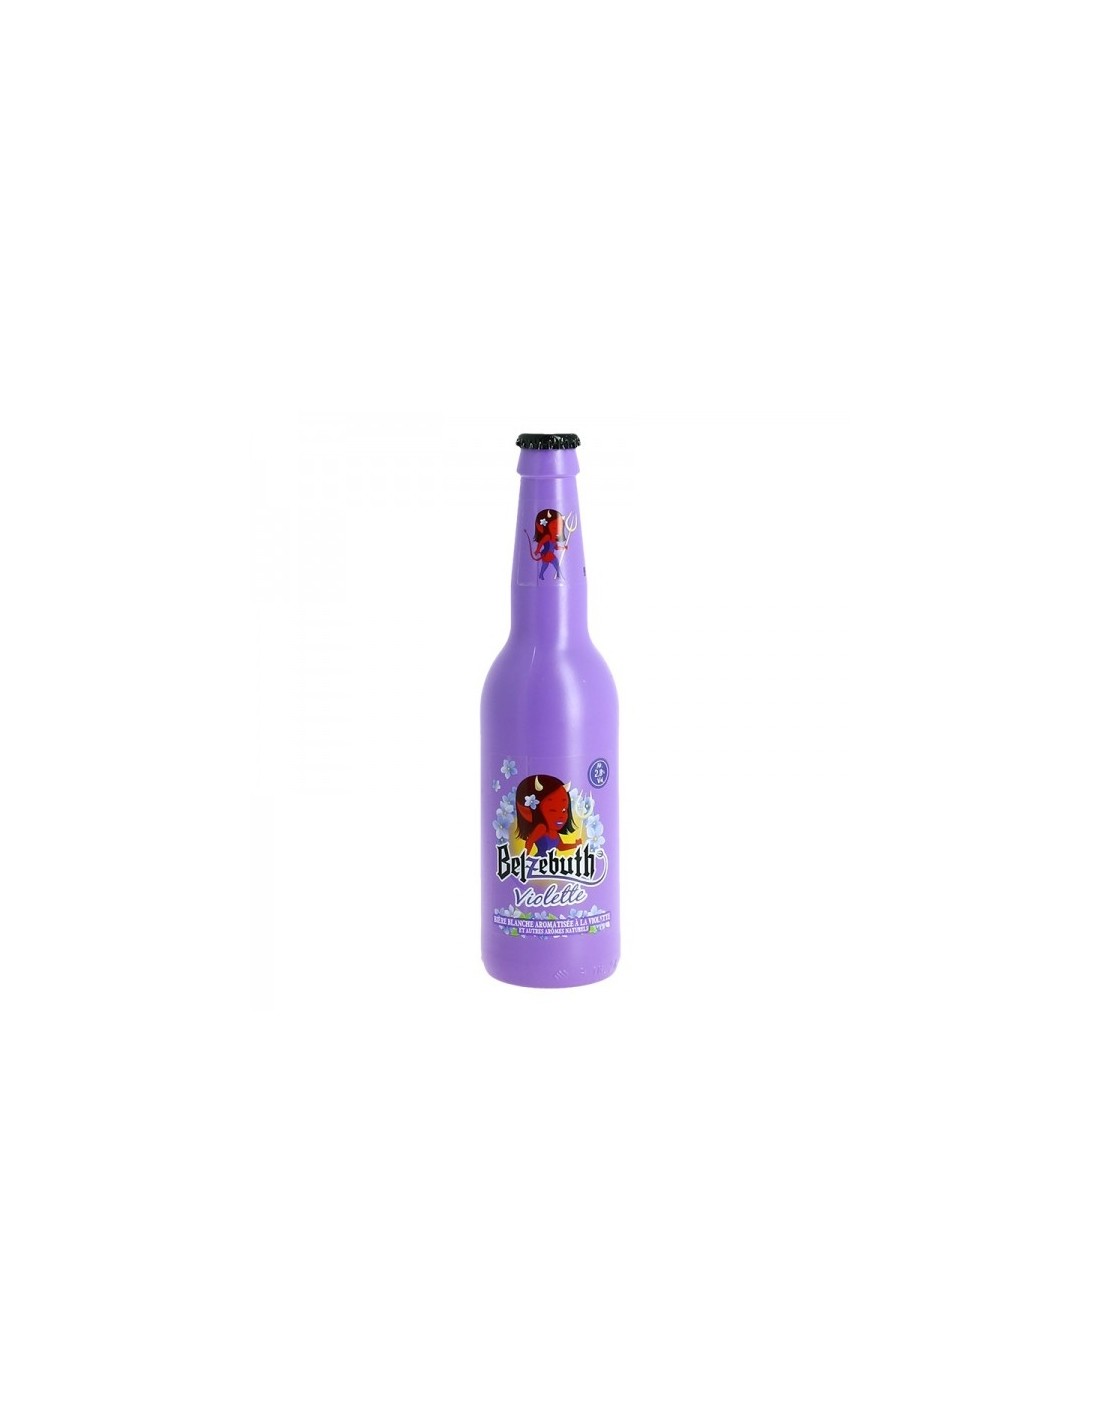 Bere Belzebuth Violette, 2.8% alc., 0.33L, Franta alcooldiscount.ro